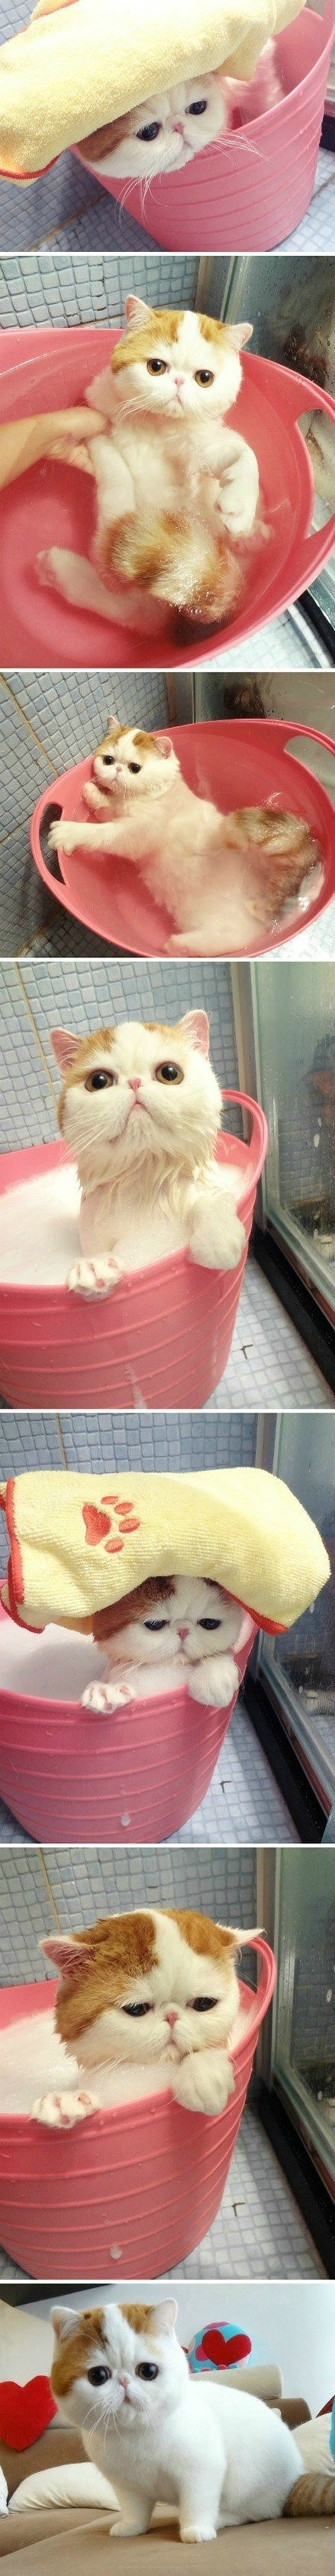 Gato en su momento baño